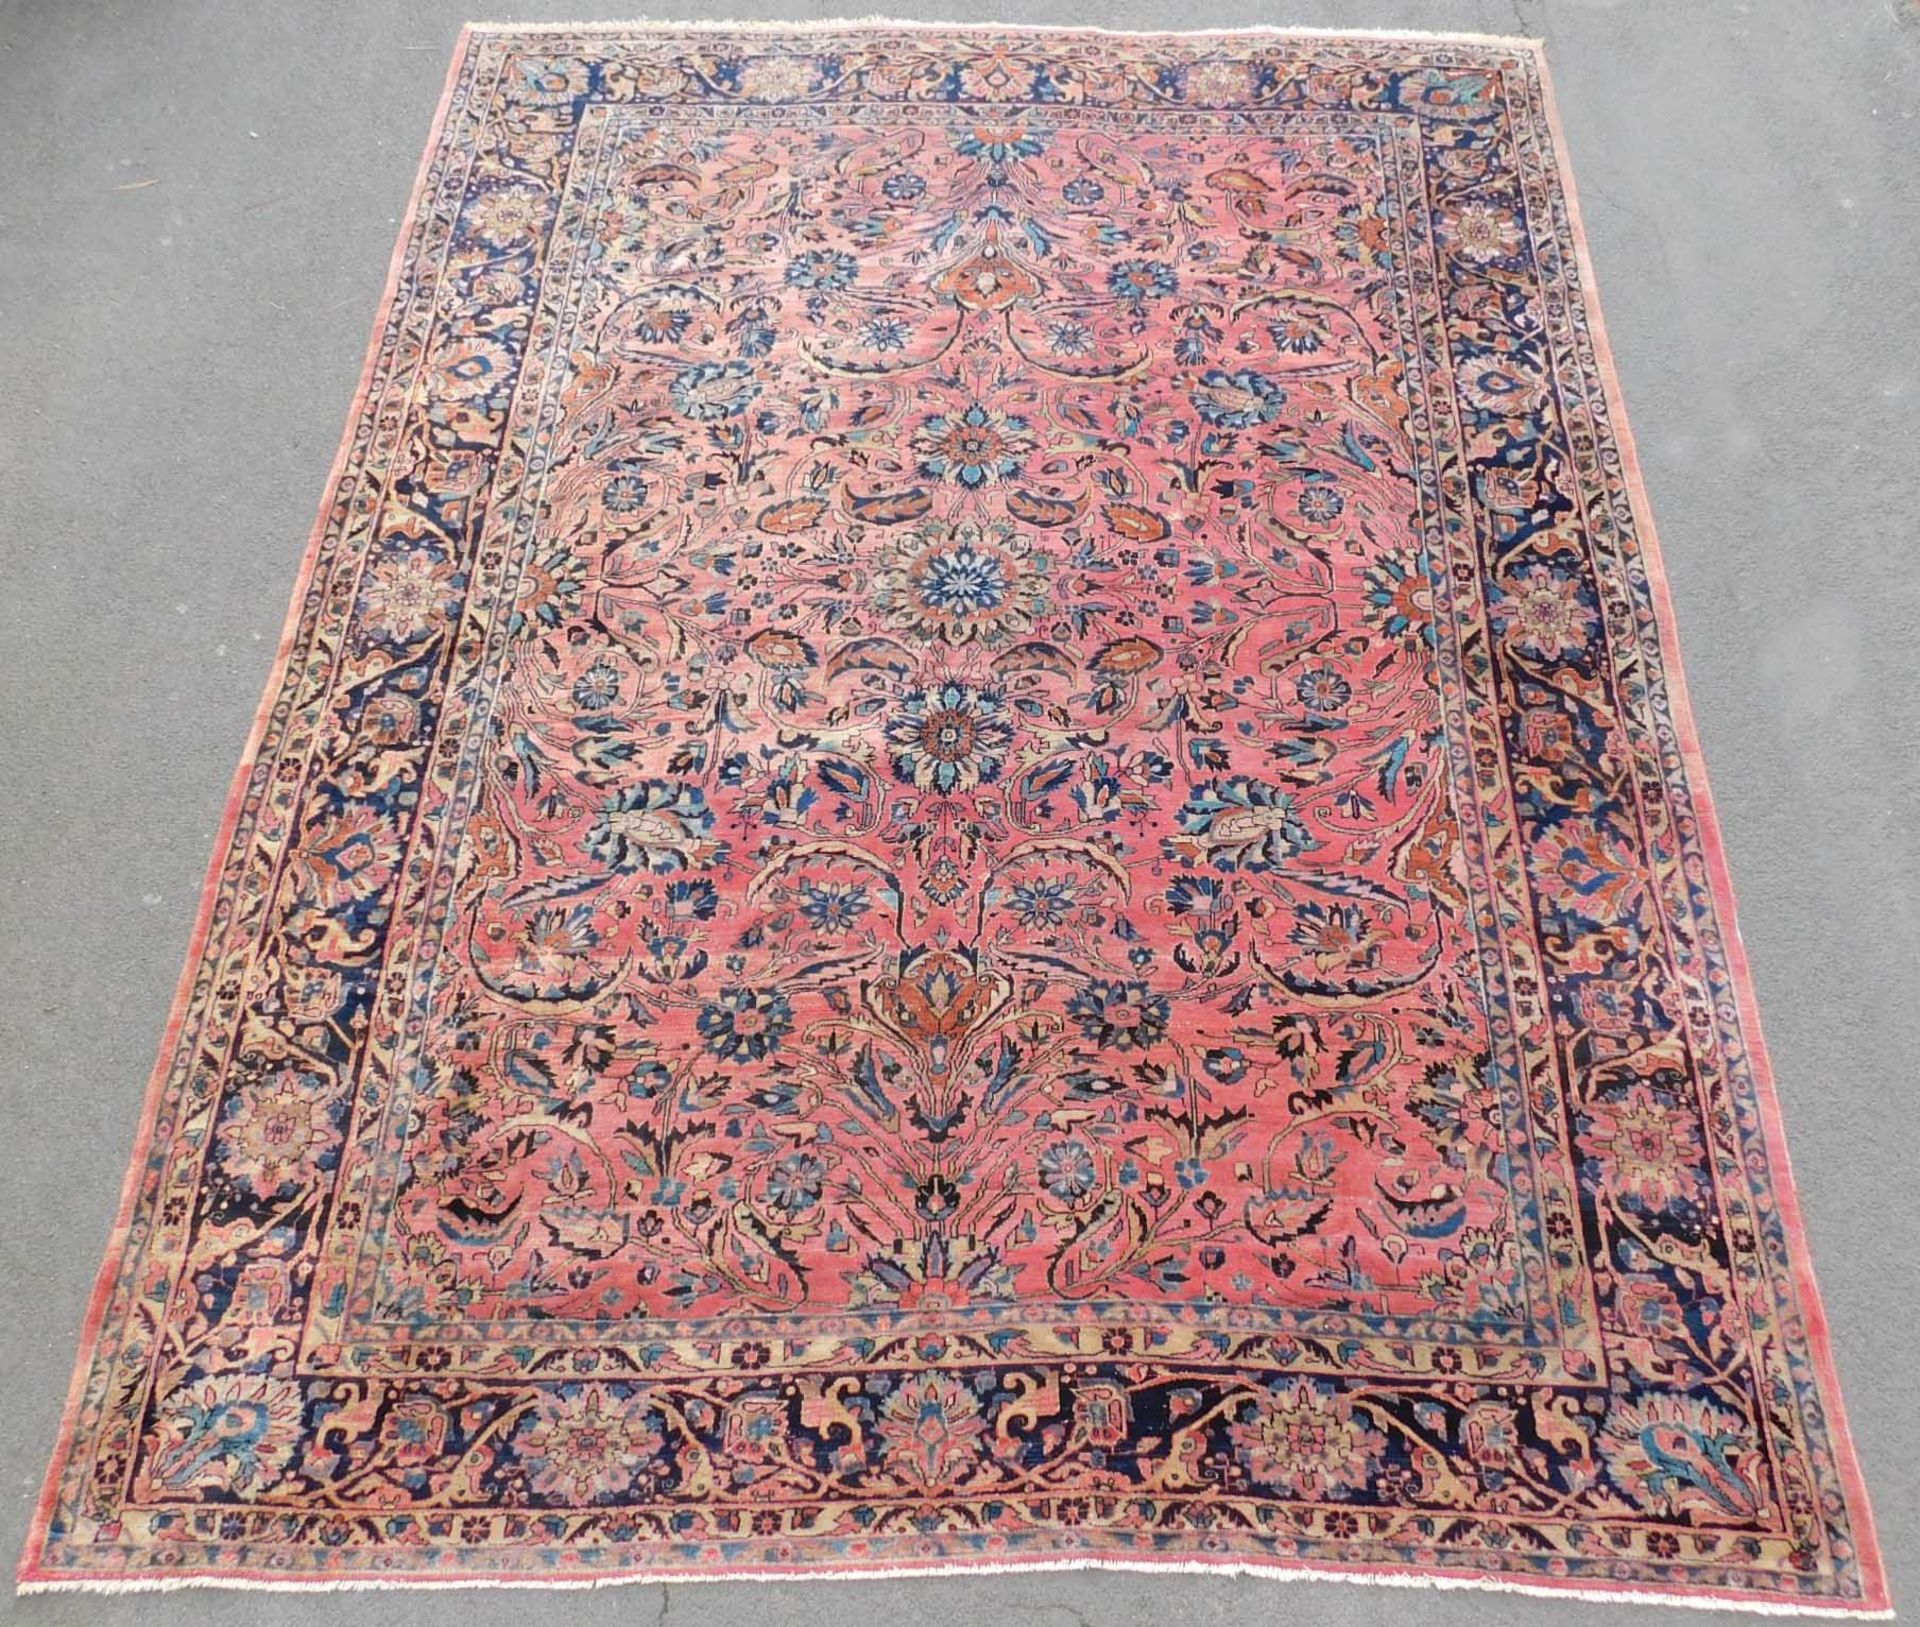 Saruk Persian carpet. "American Saruk". Iran. About 100 years old.